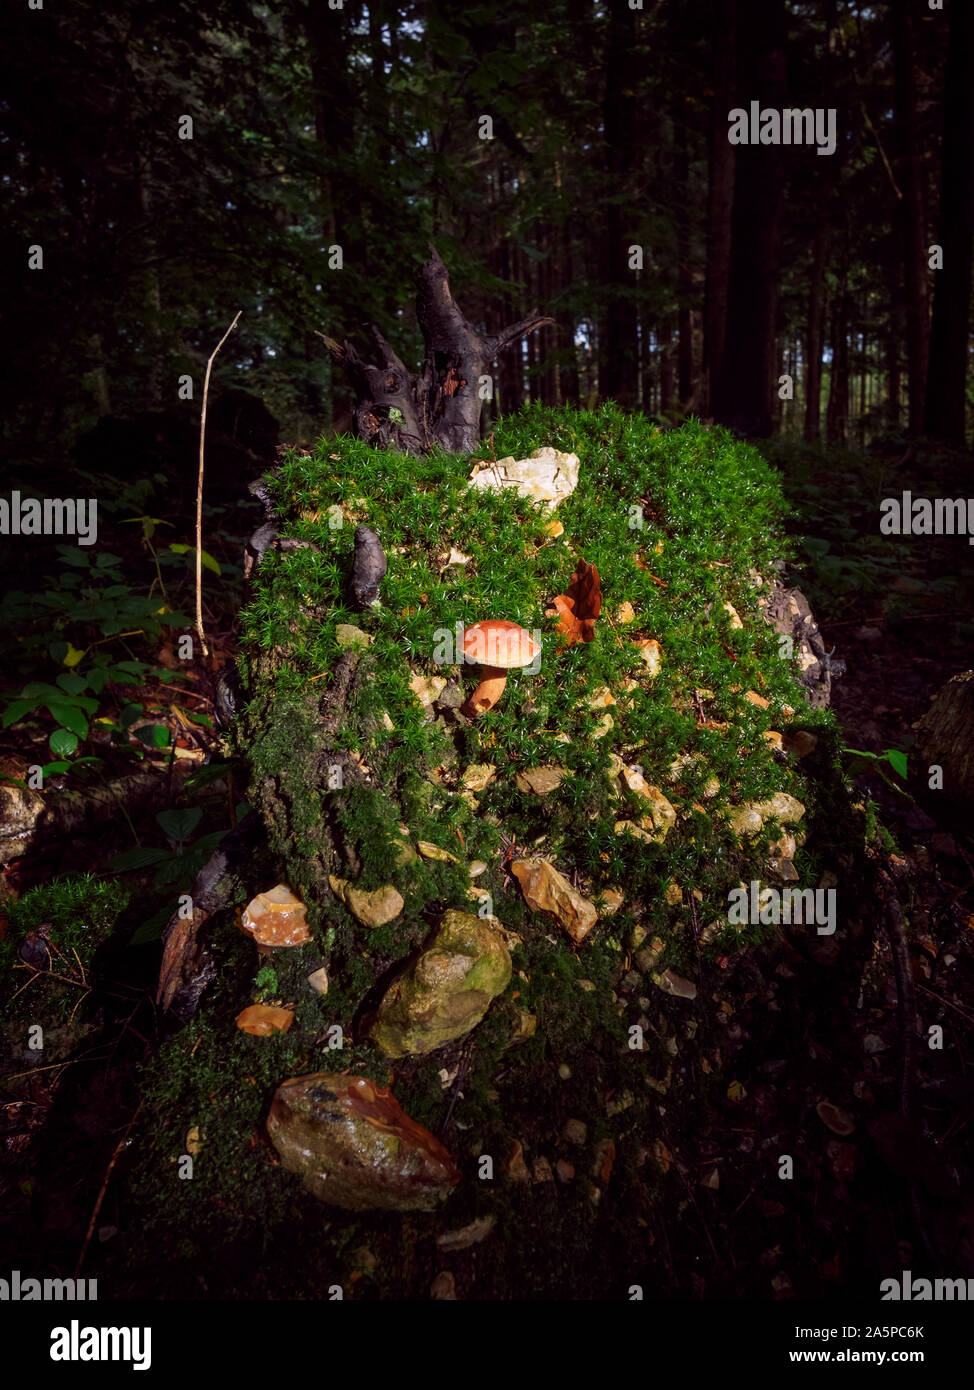 Wild mushroom Boletus Edulis growing in the forest, wild mushrooms in the woods. Edible mushrooms Stock Photo